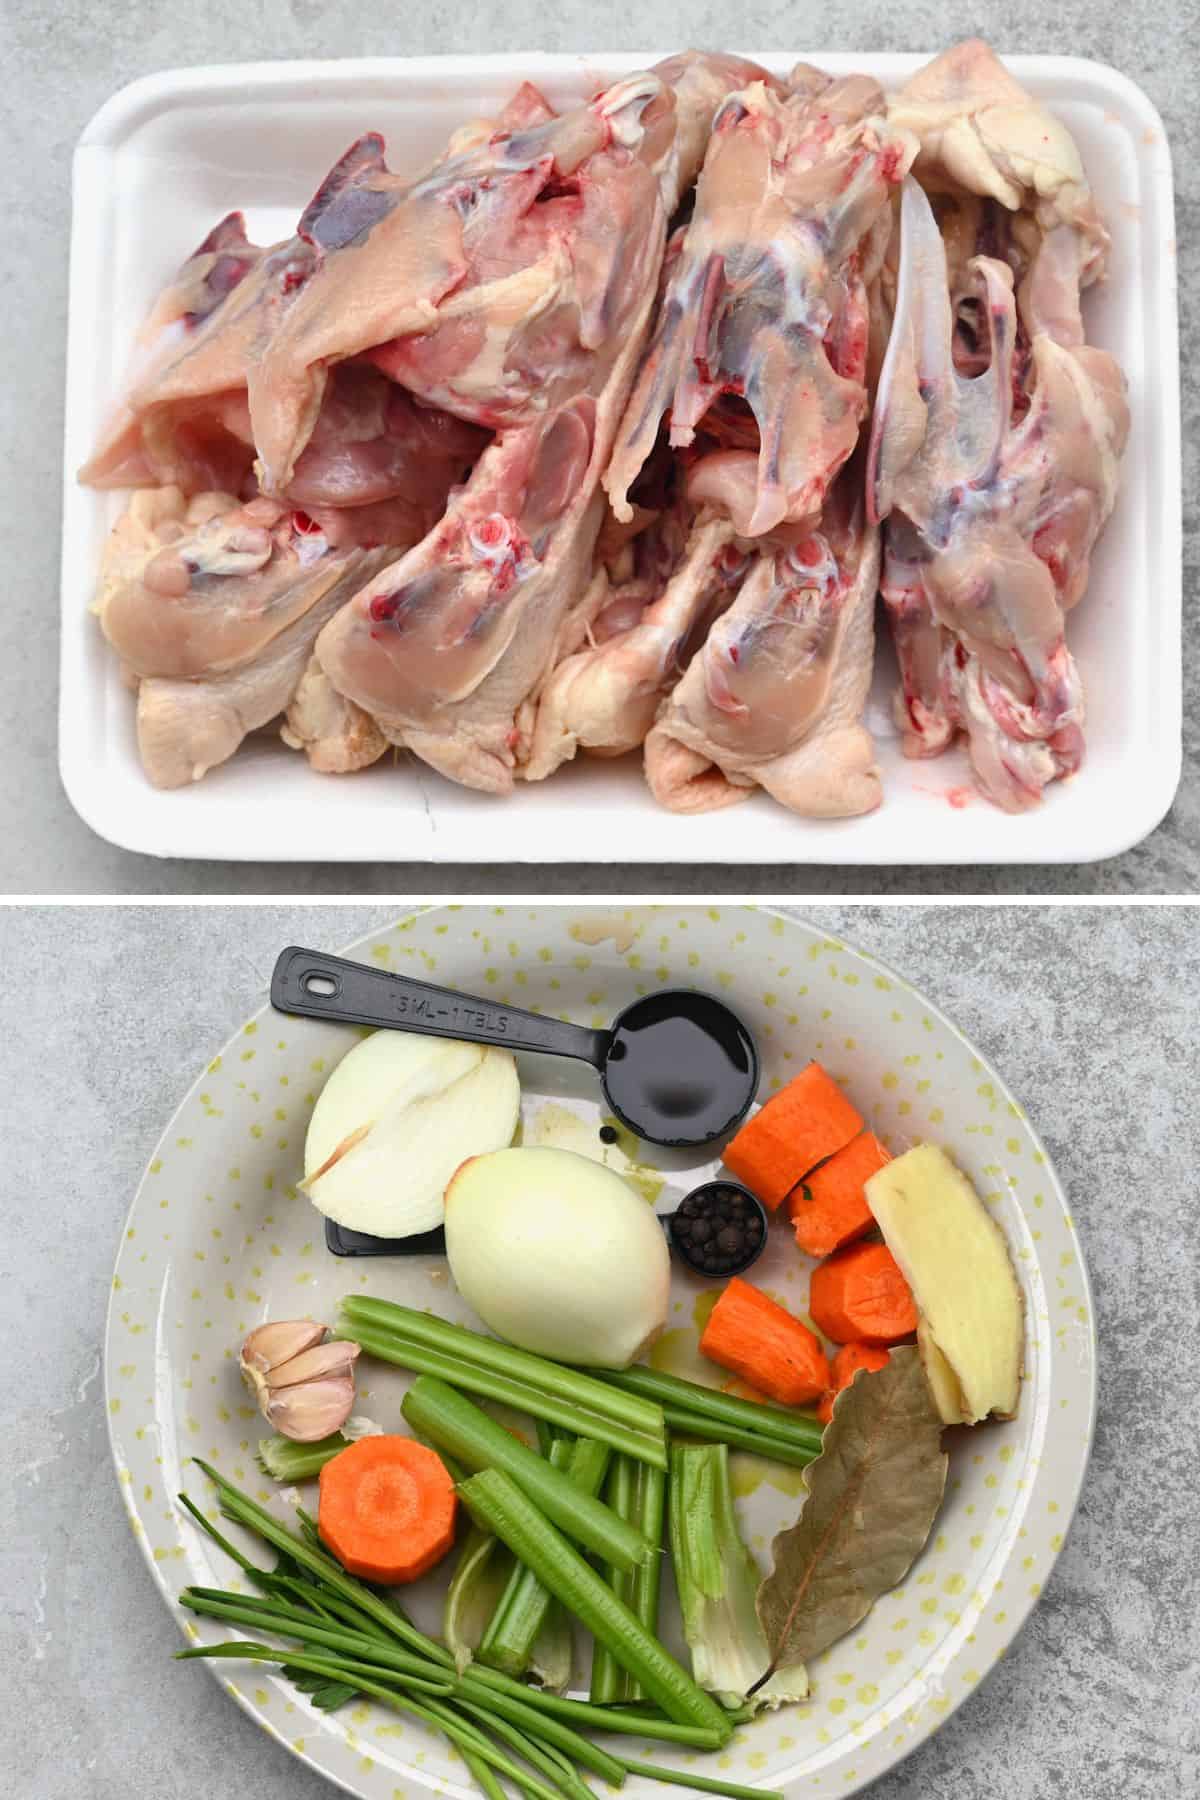 Prepared ingredients for making chicken stock